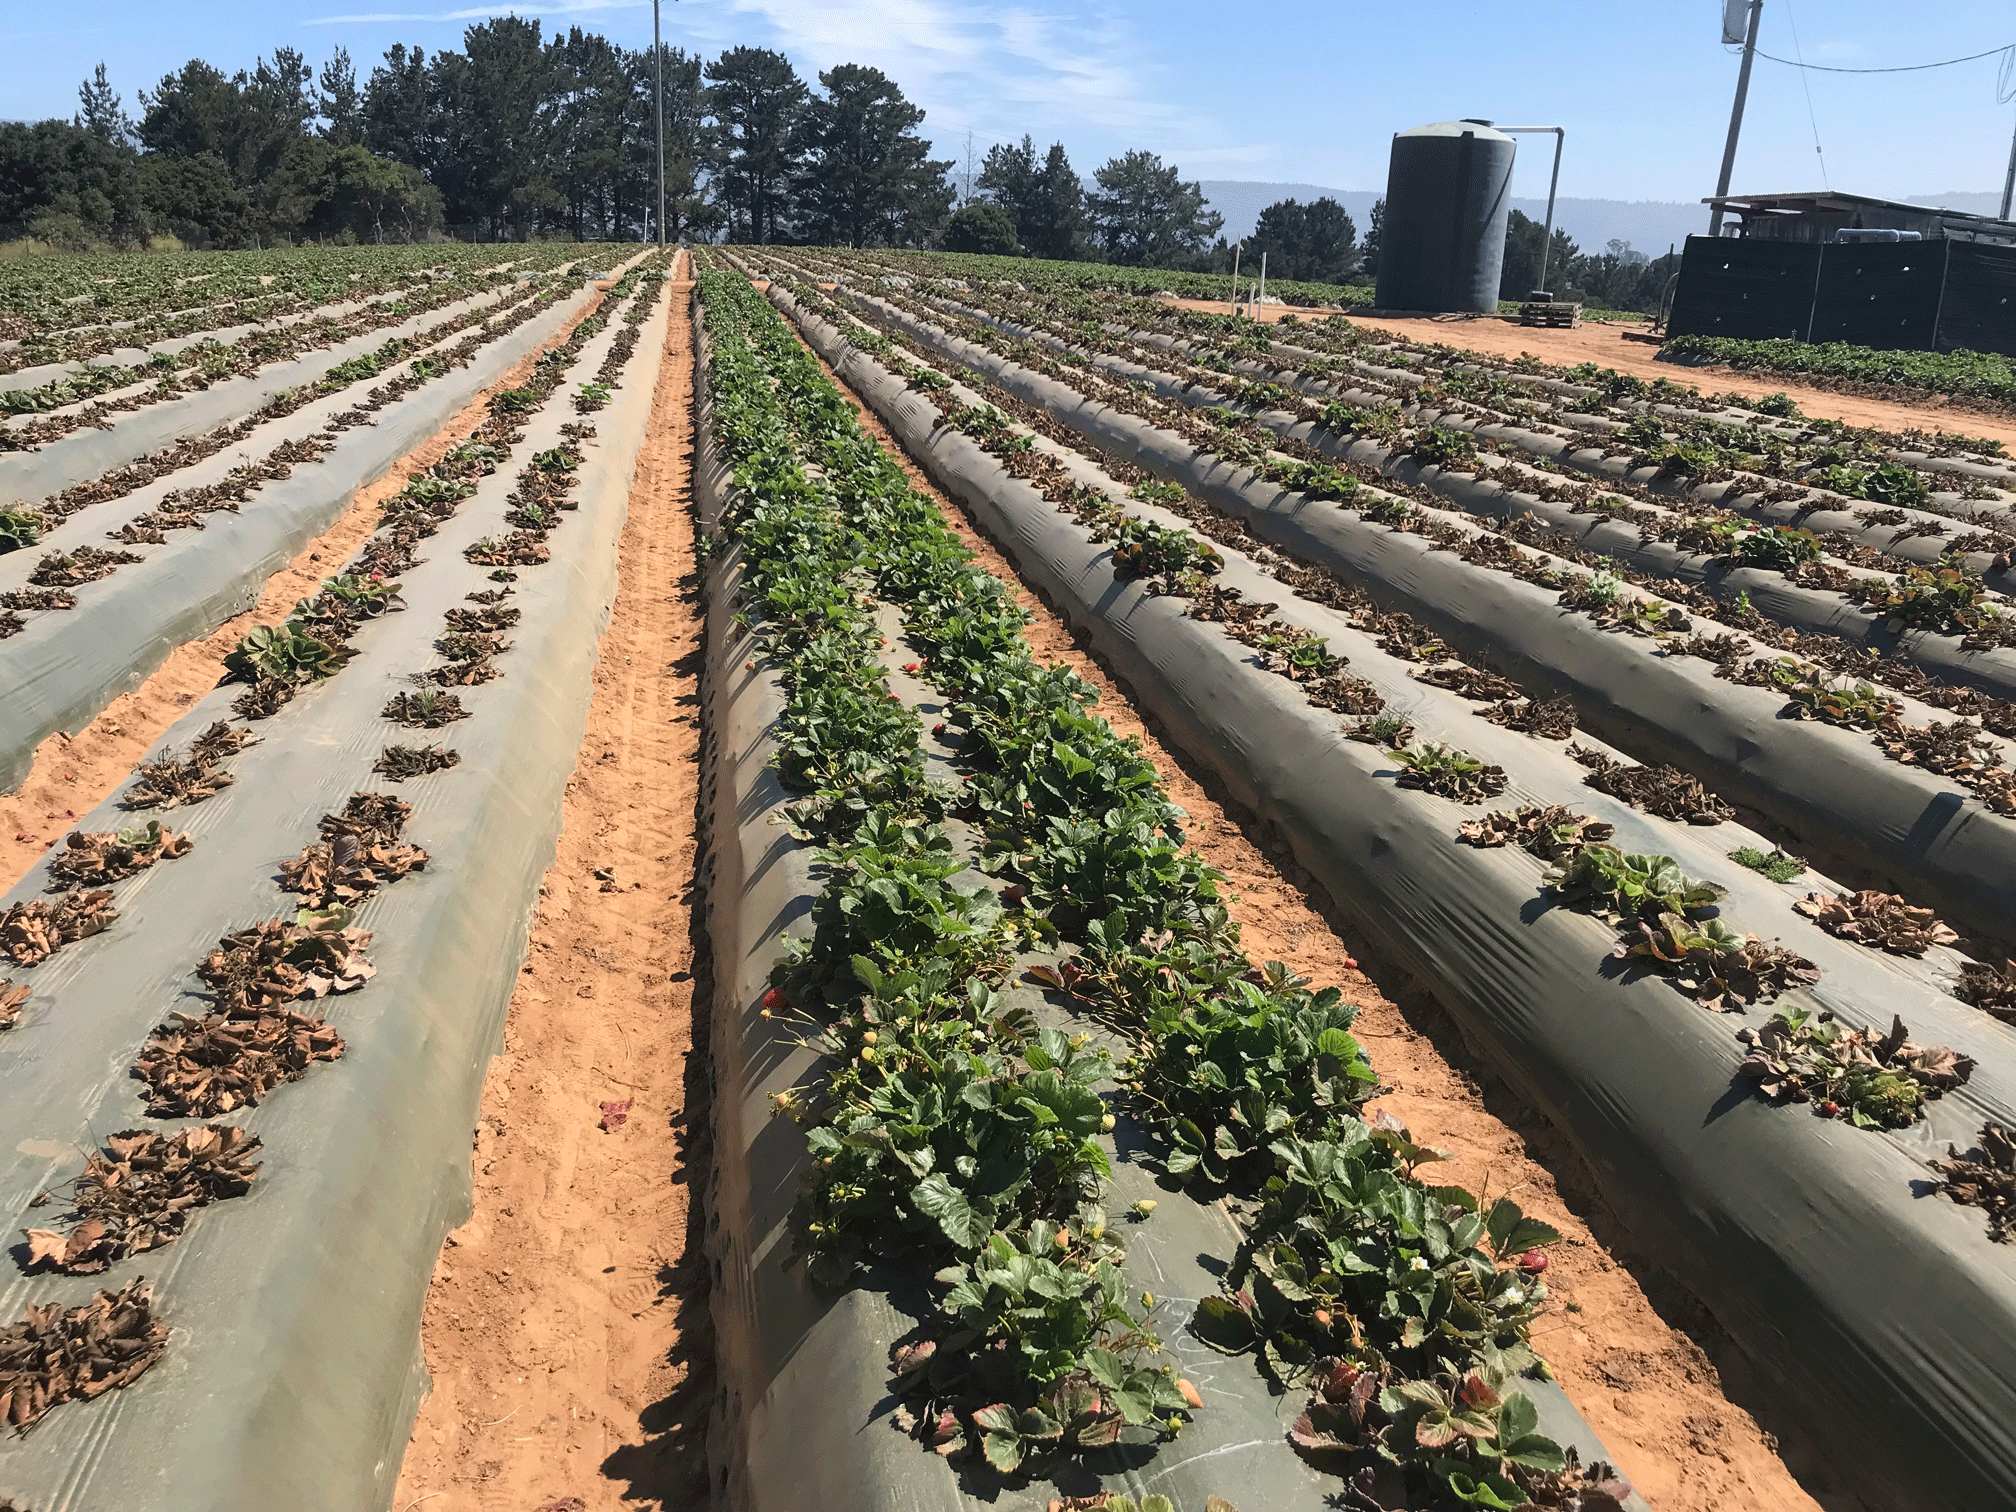 Rows of strawberry plants in an open field.